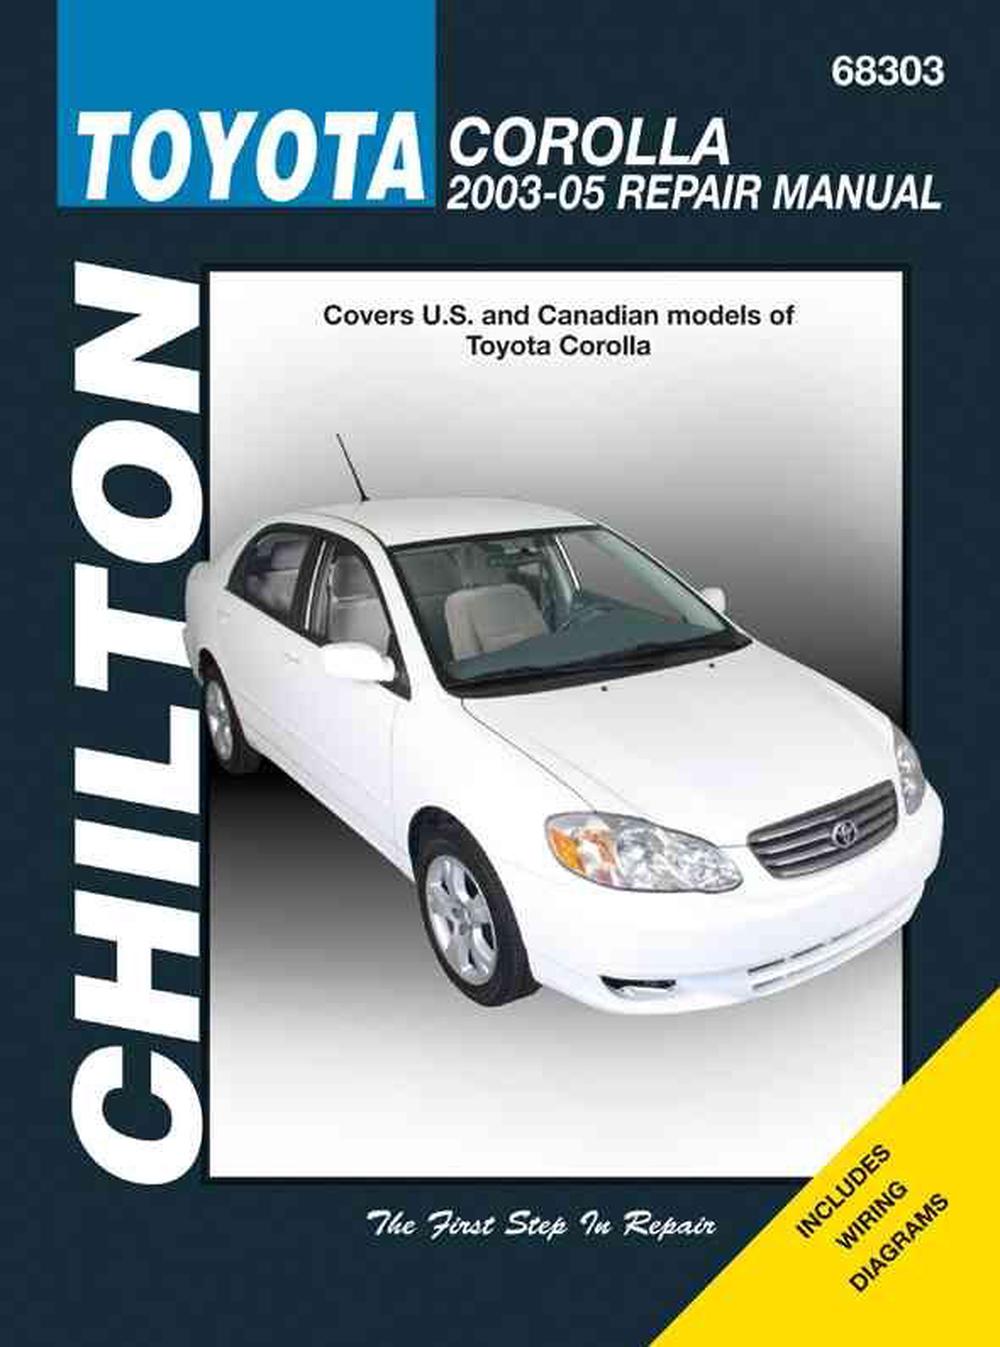 Toyota Corolla Repair Manual by Jay Storer, Paperback, 9781563926150